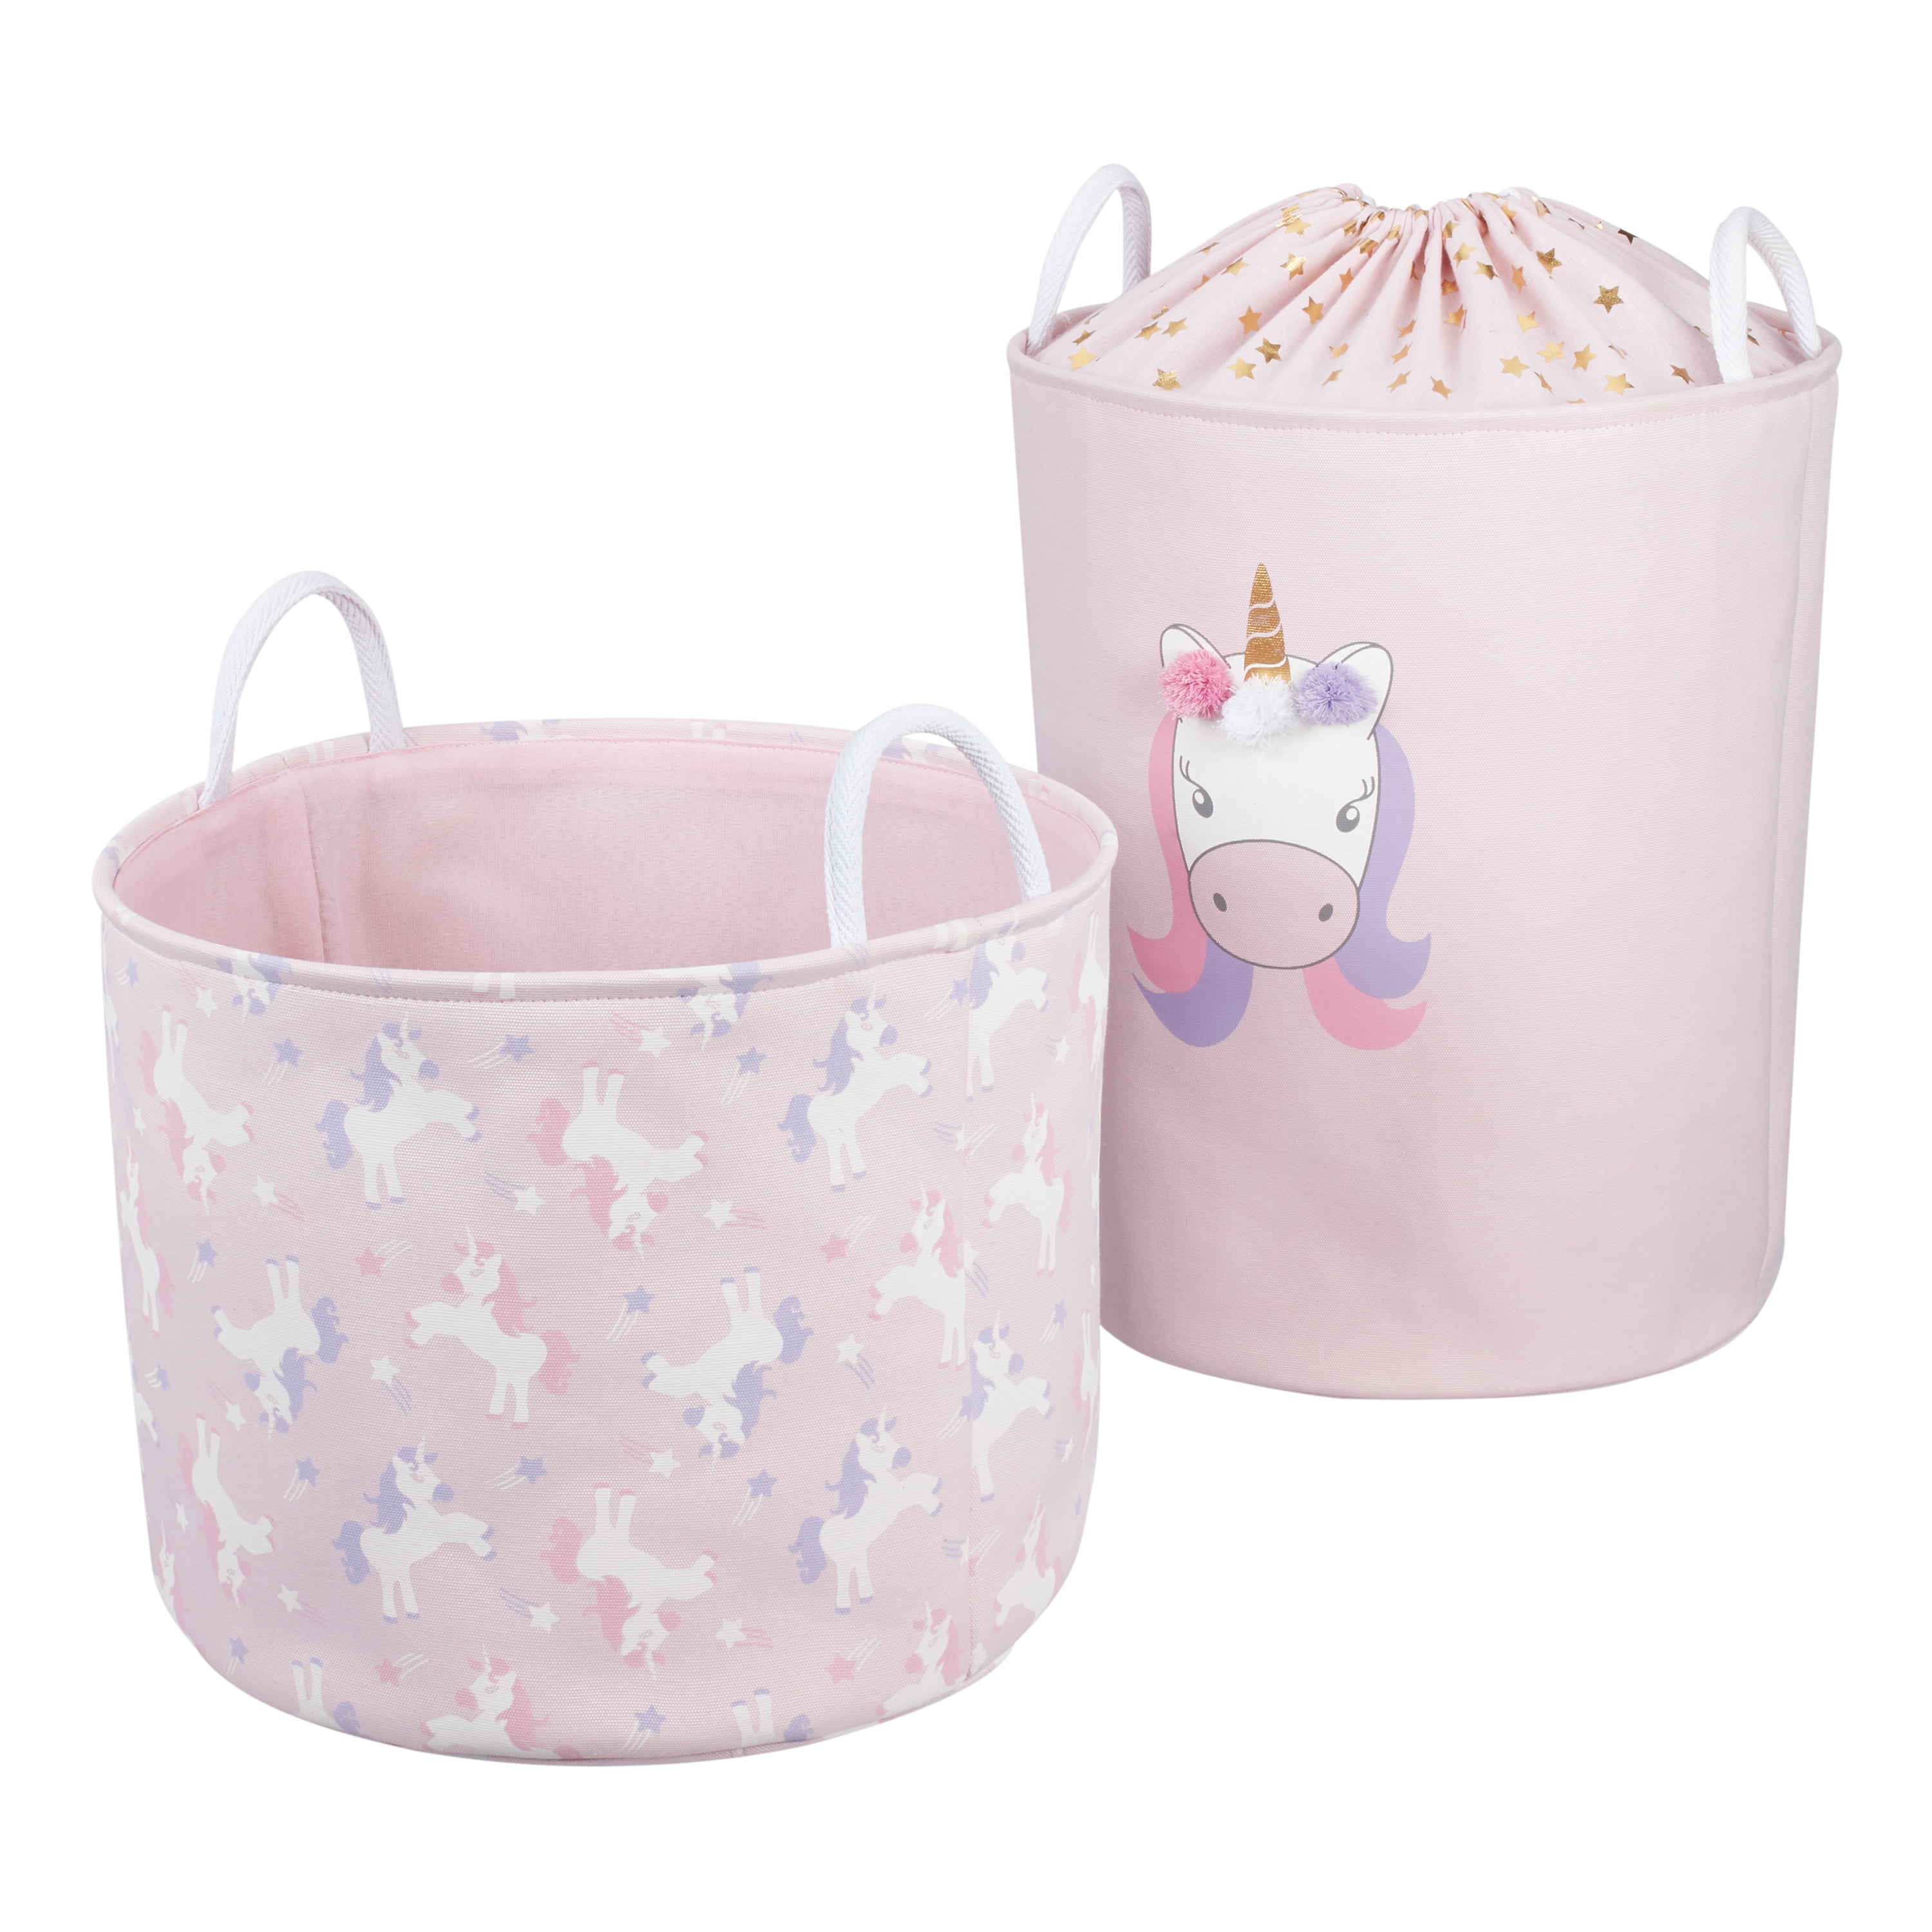 QIMI Laundry Basket Canvas Storage Bin Organizer for Toy Box Gift Baskets Laundry Hamper Nursery Hamper Green unicorn 